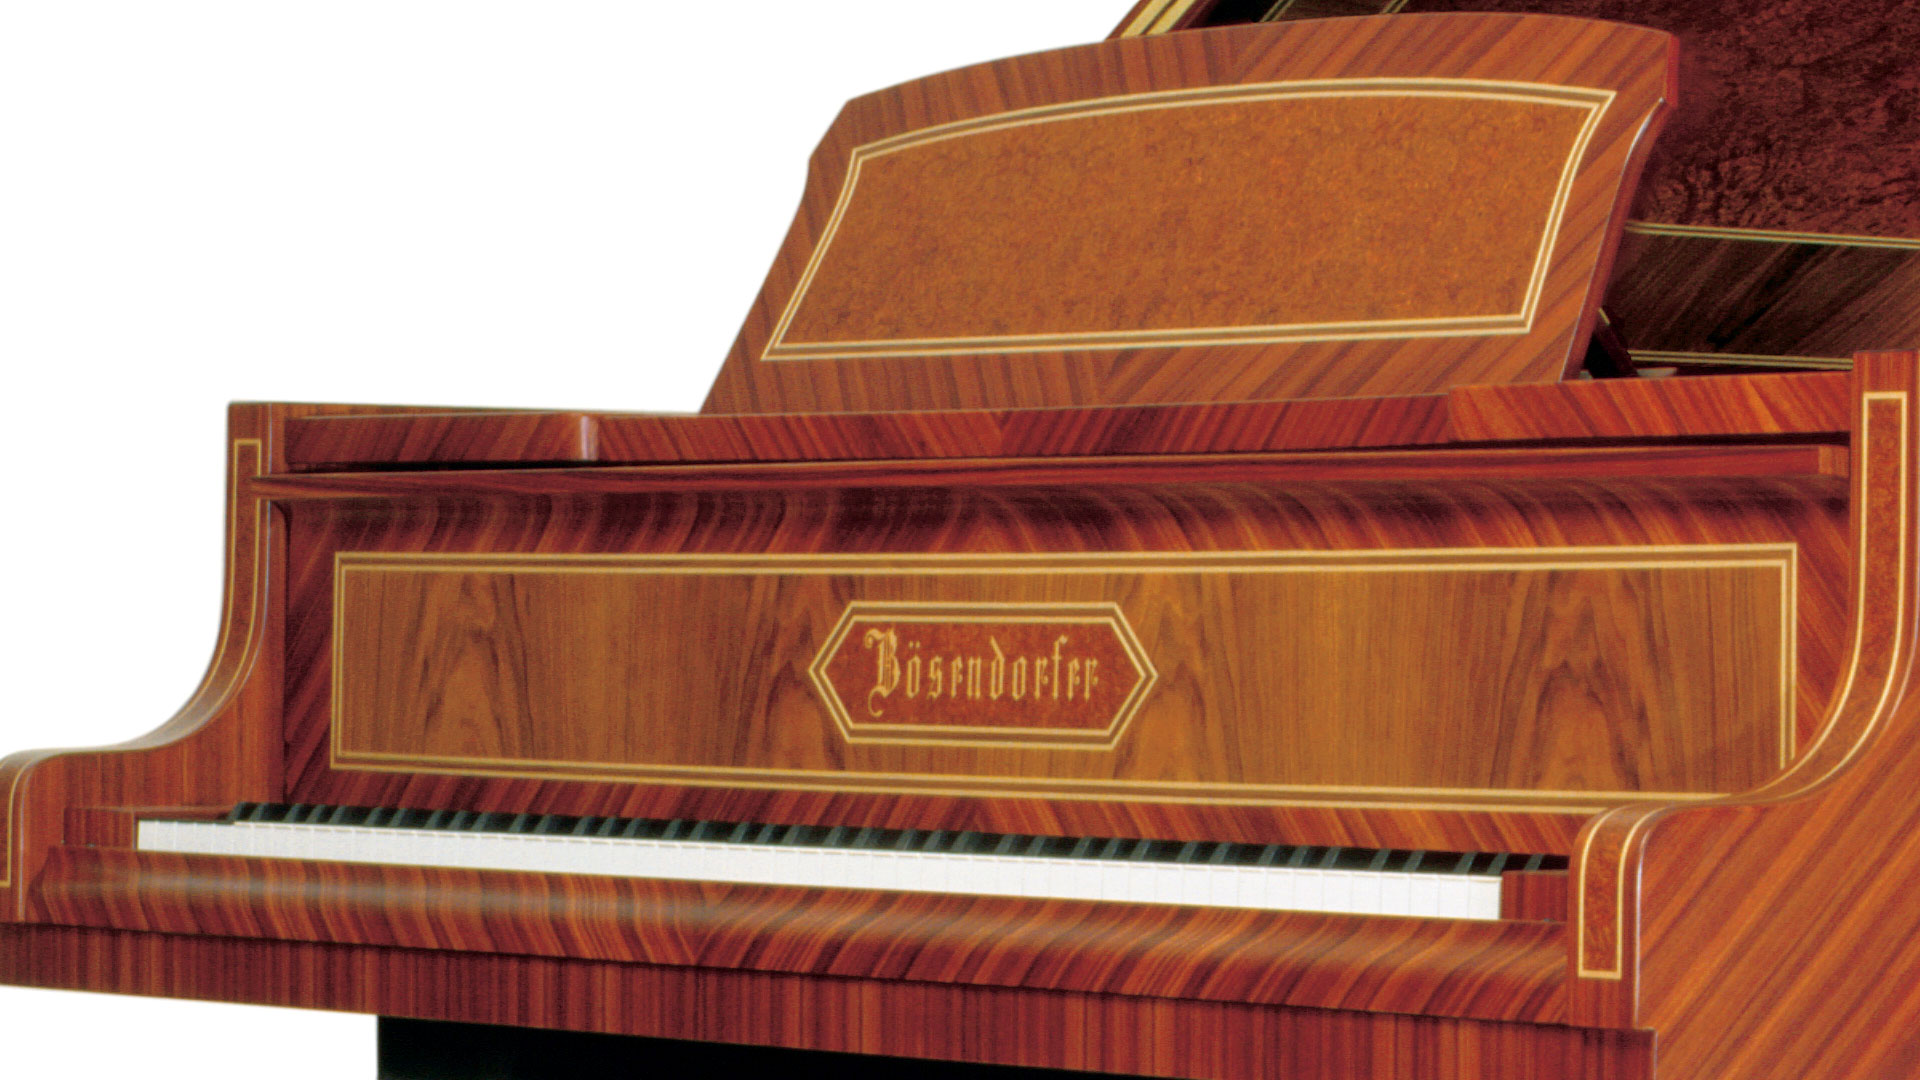 Bosendorfer piano Artisan grand piano